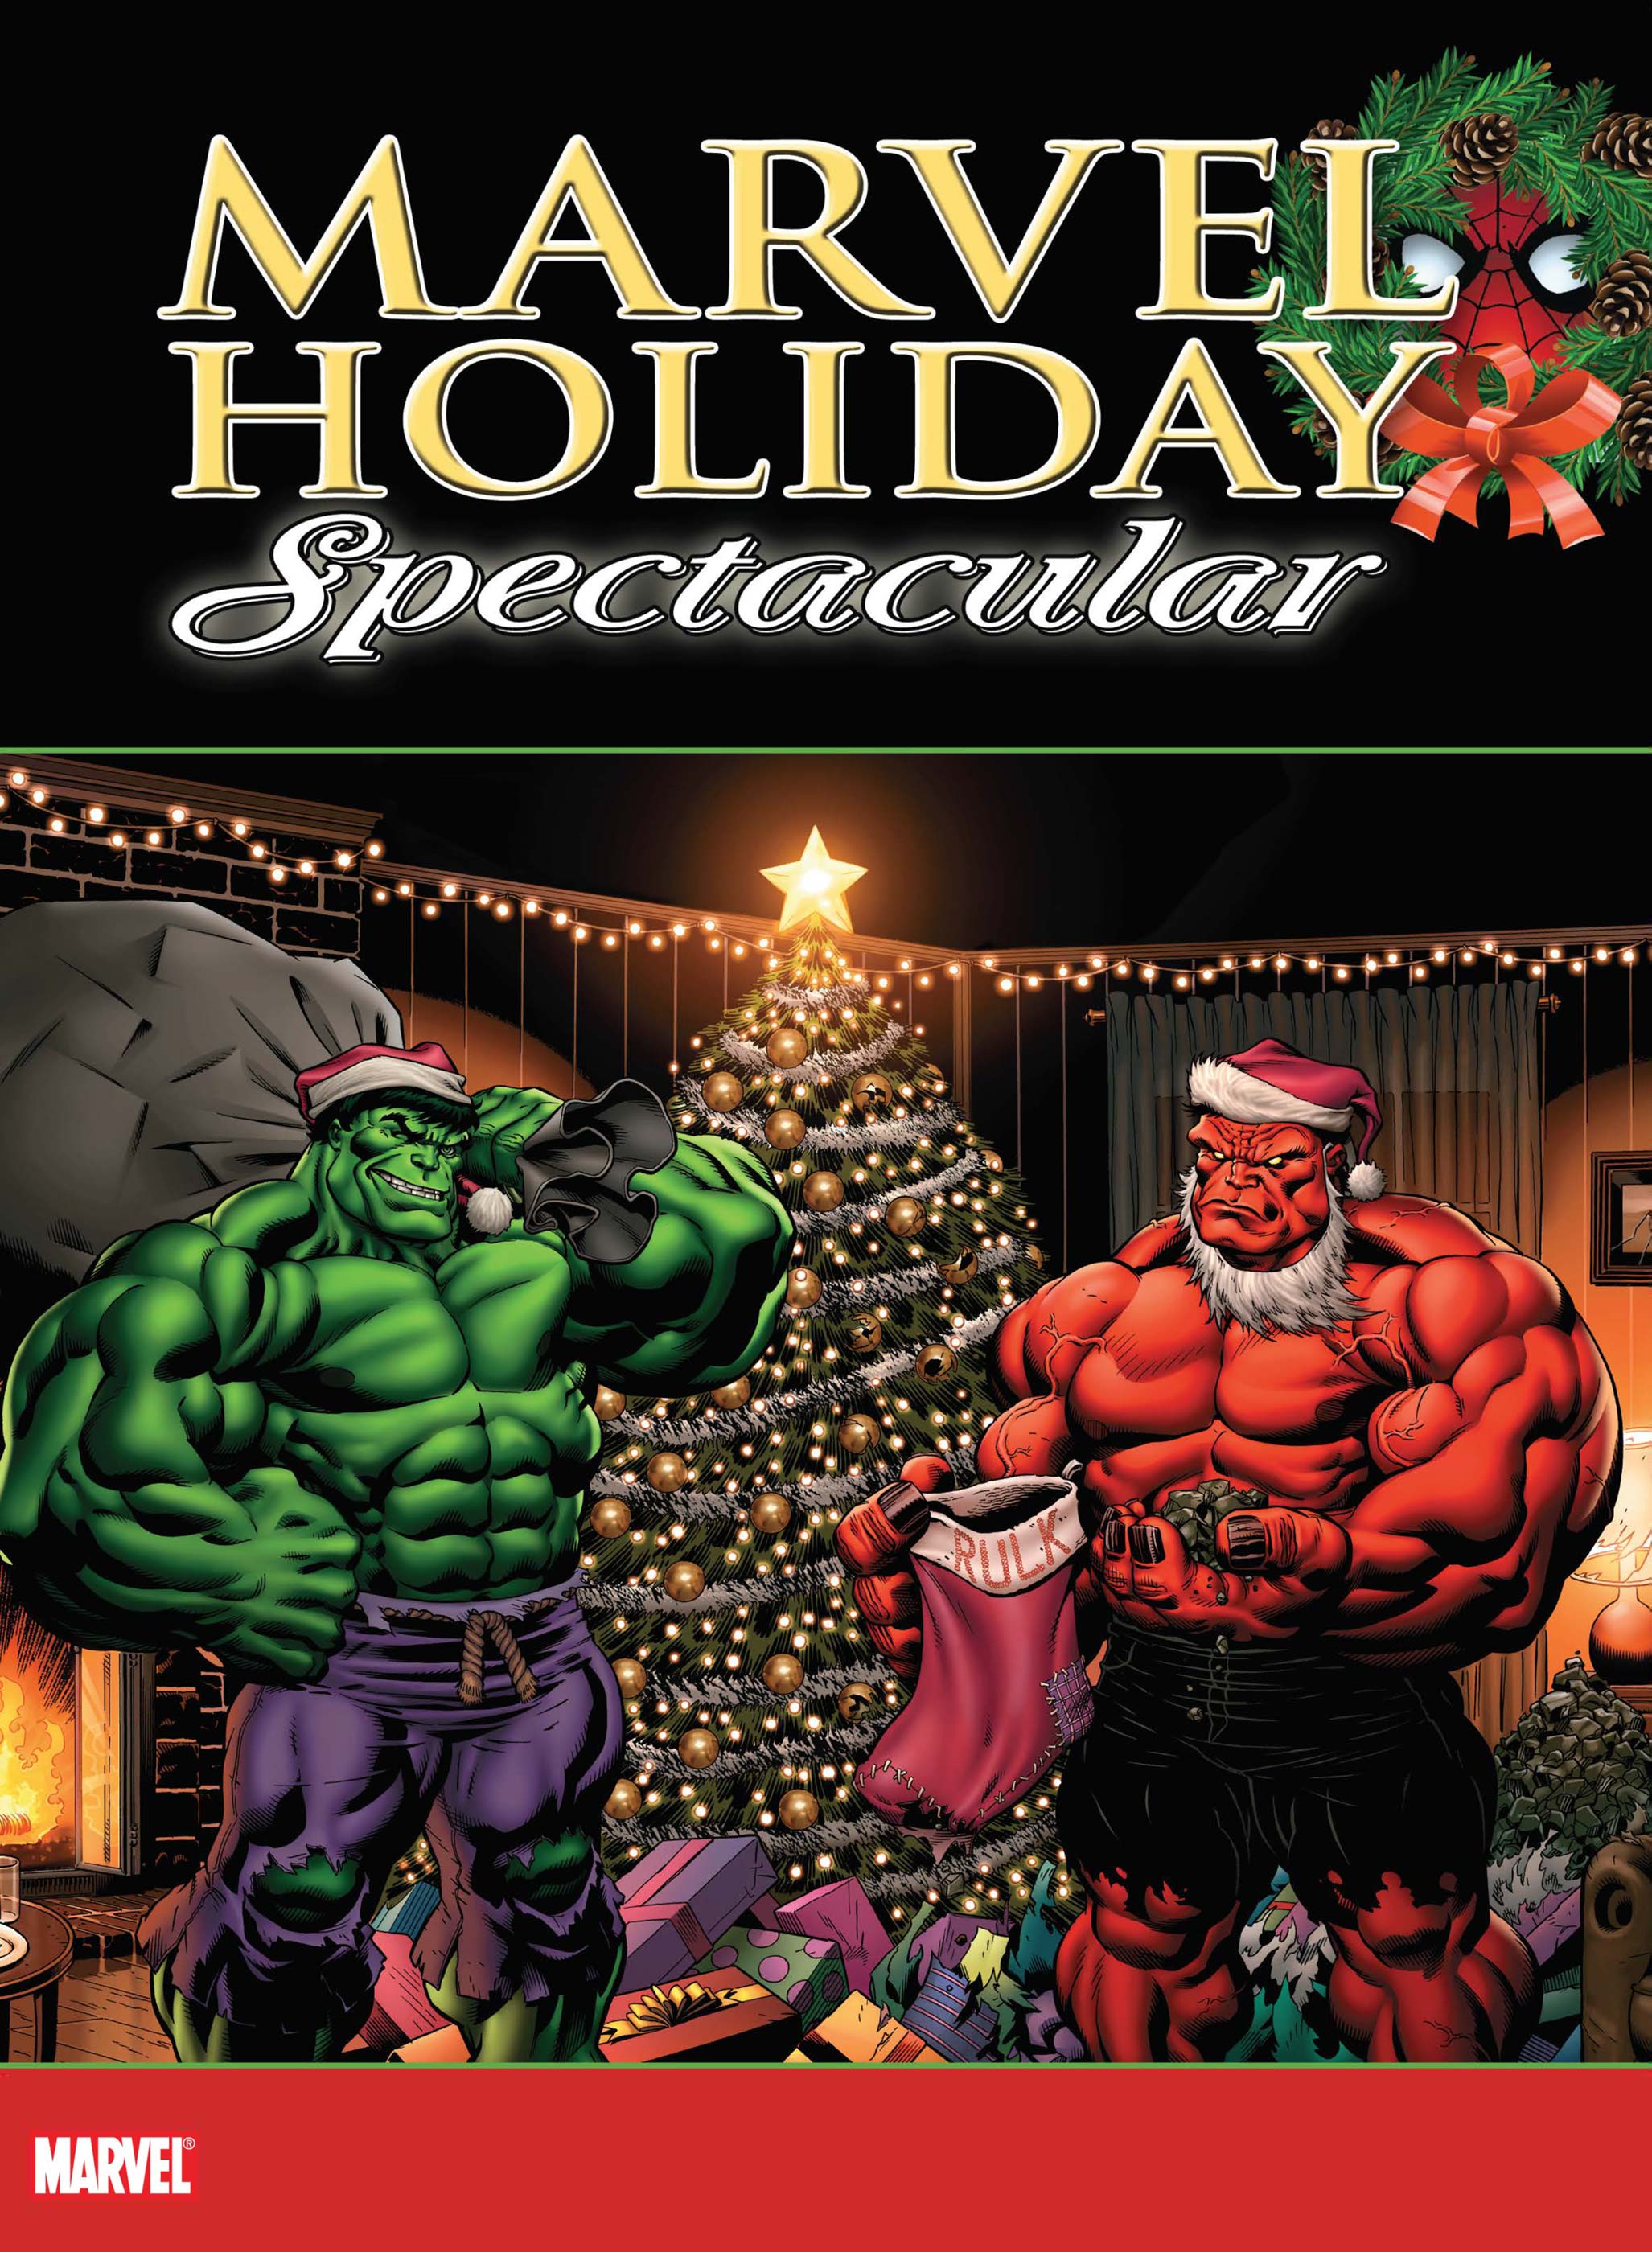 Marvel Holiday Spectacular (2009) #1